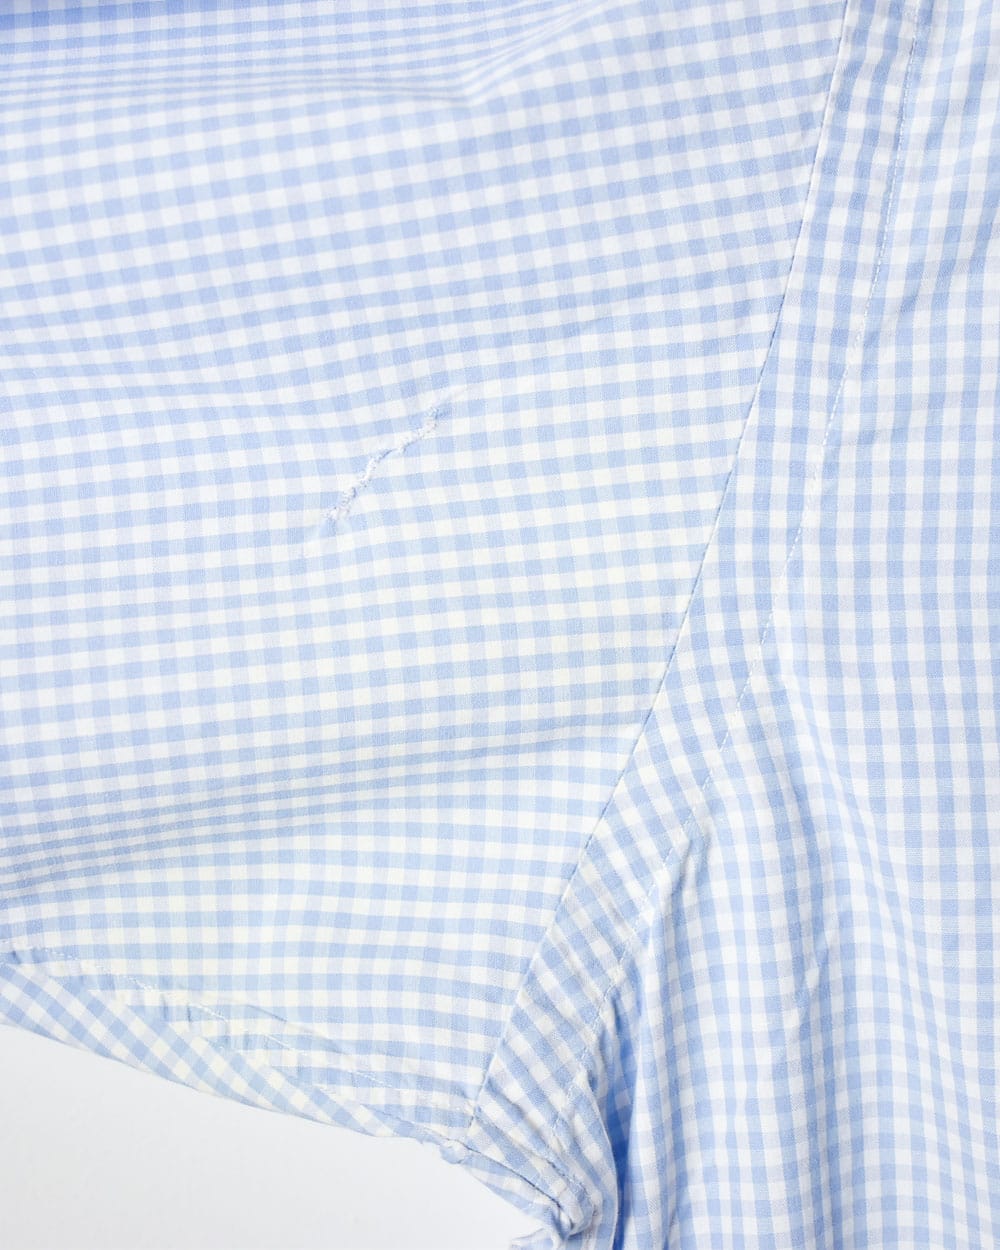 BabyBlue Polo Ralph Lauren Checked Shirt - Medium